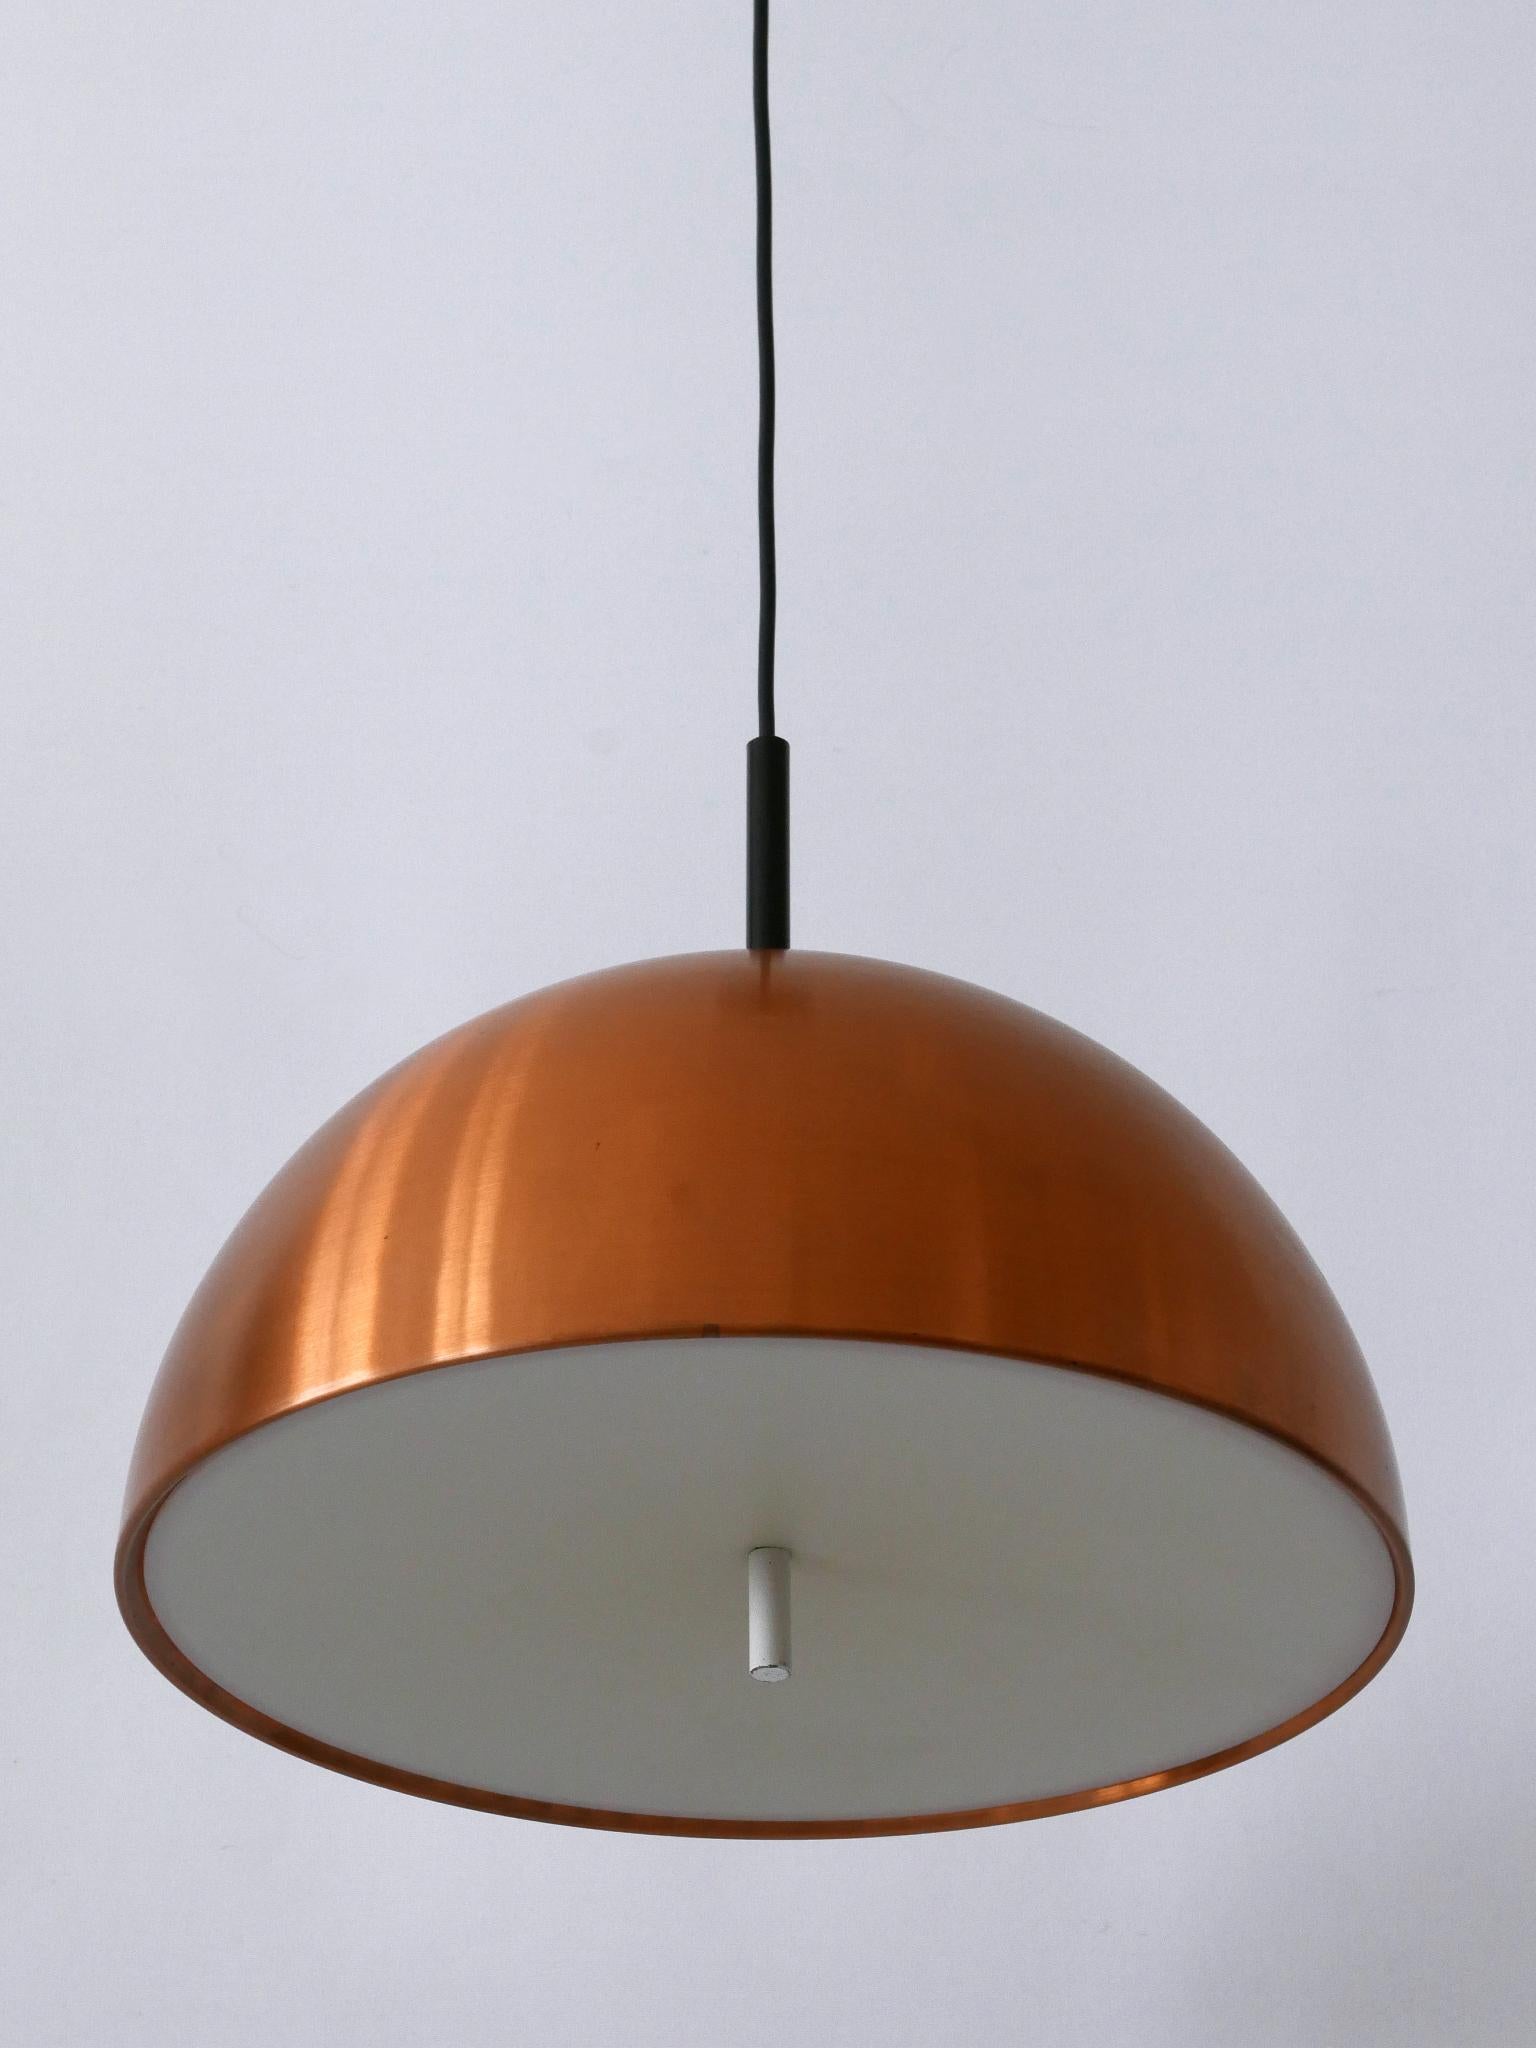 Elegant Mid-Century Modern Copper Pendant Lamp by Staff & Schwarz Germany 1960s For Sale 1